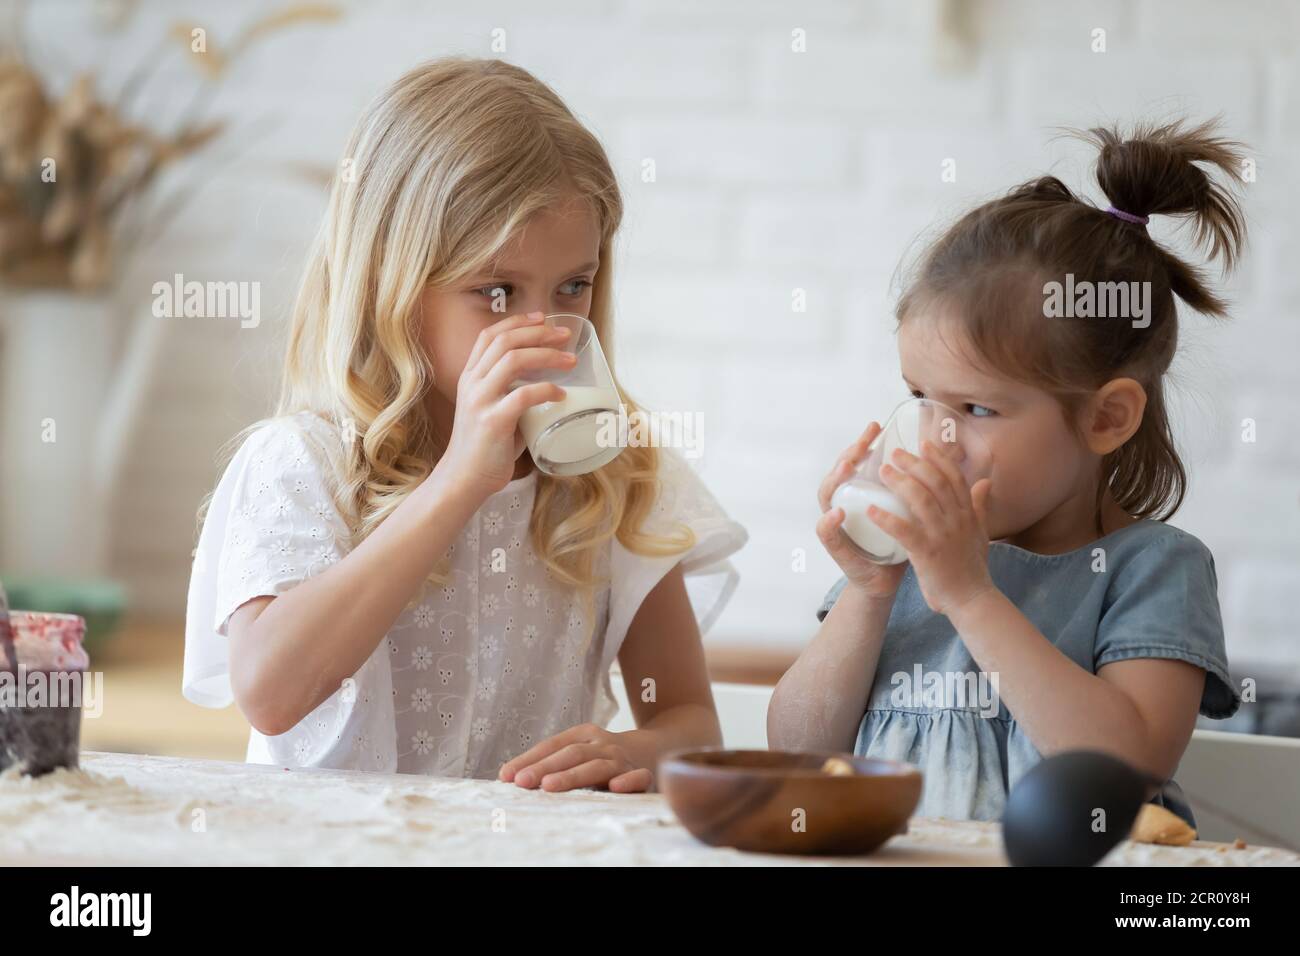 Girls drinking milk from glasses Stock Photo